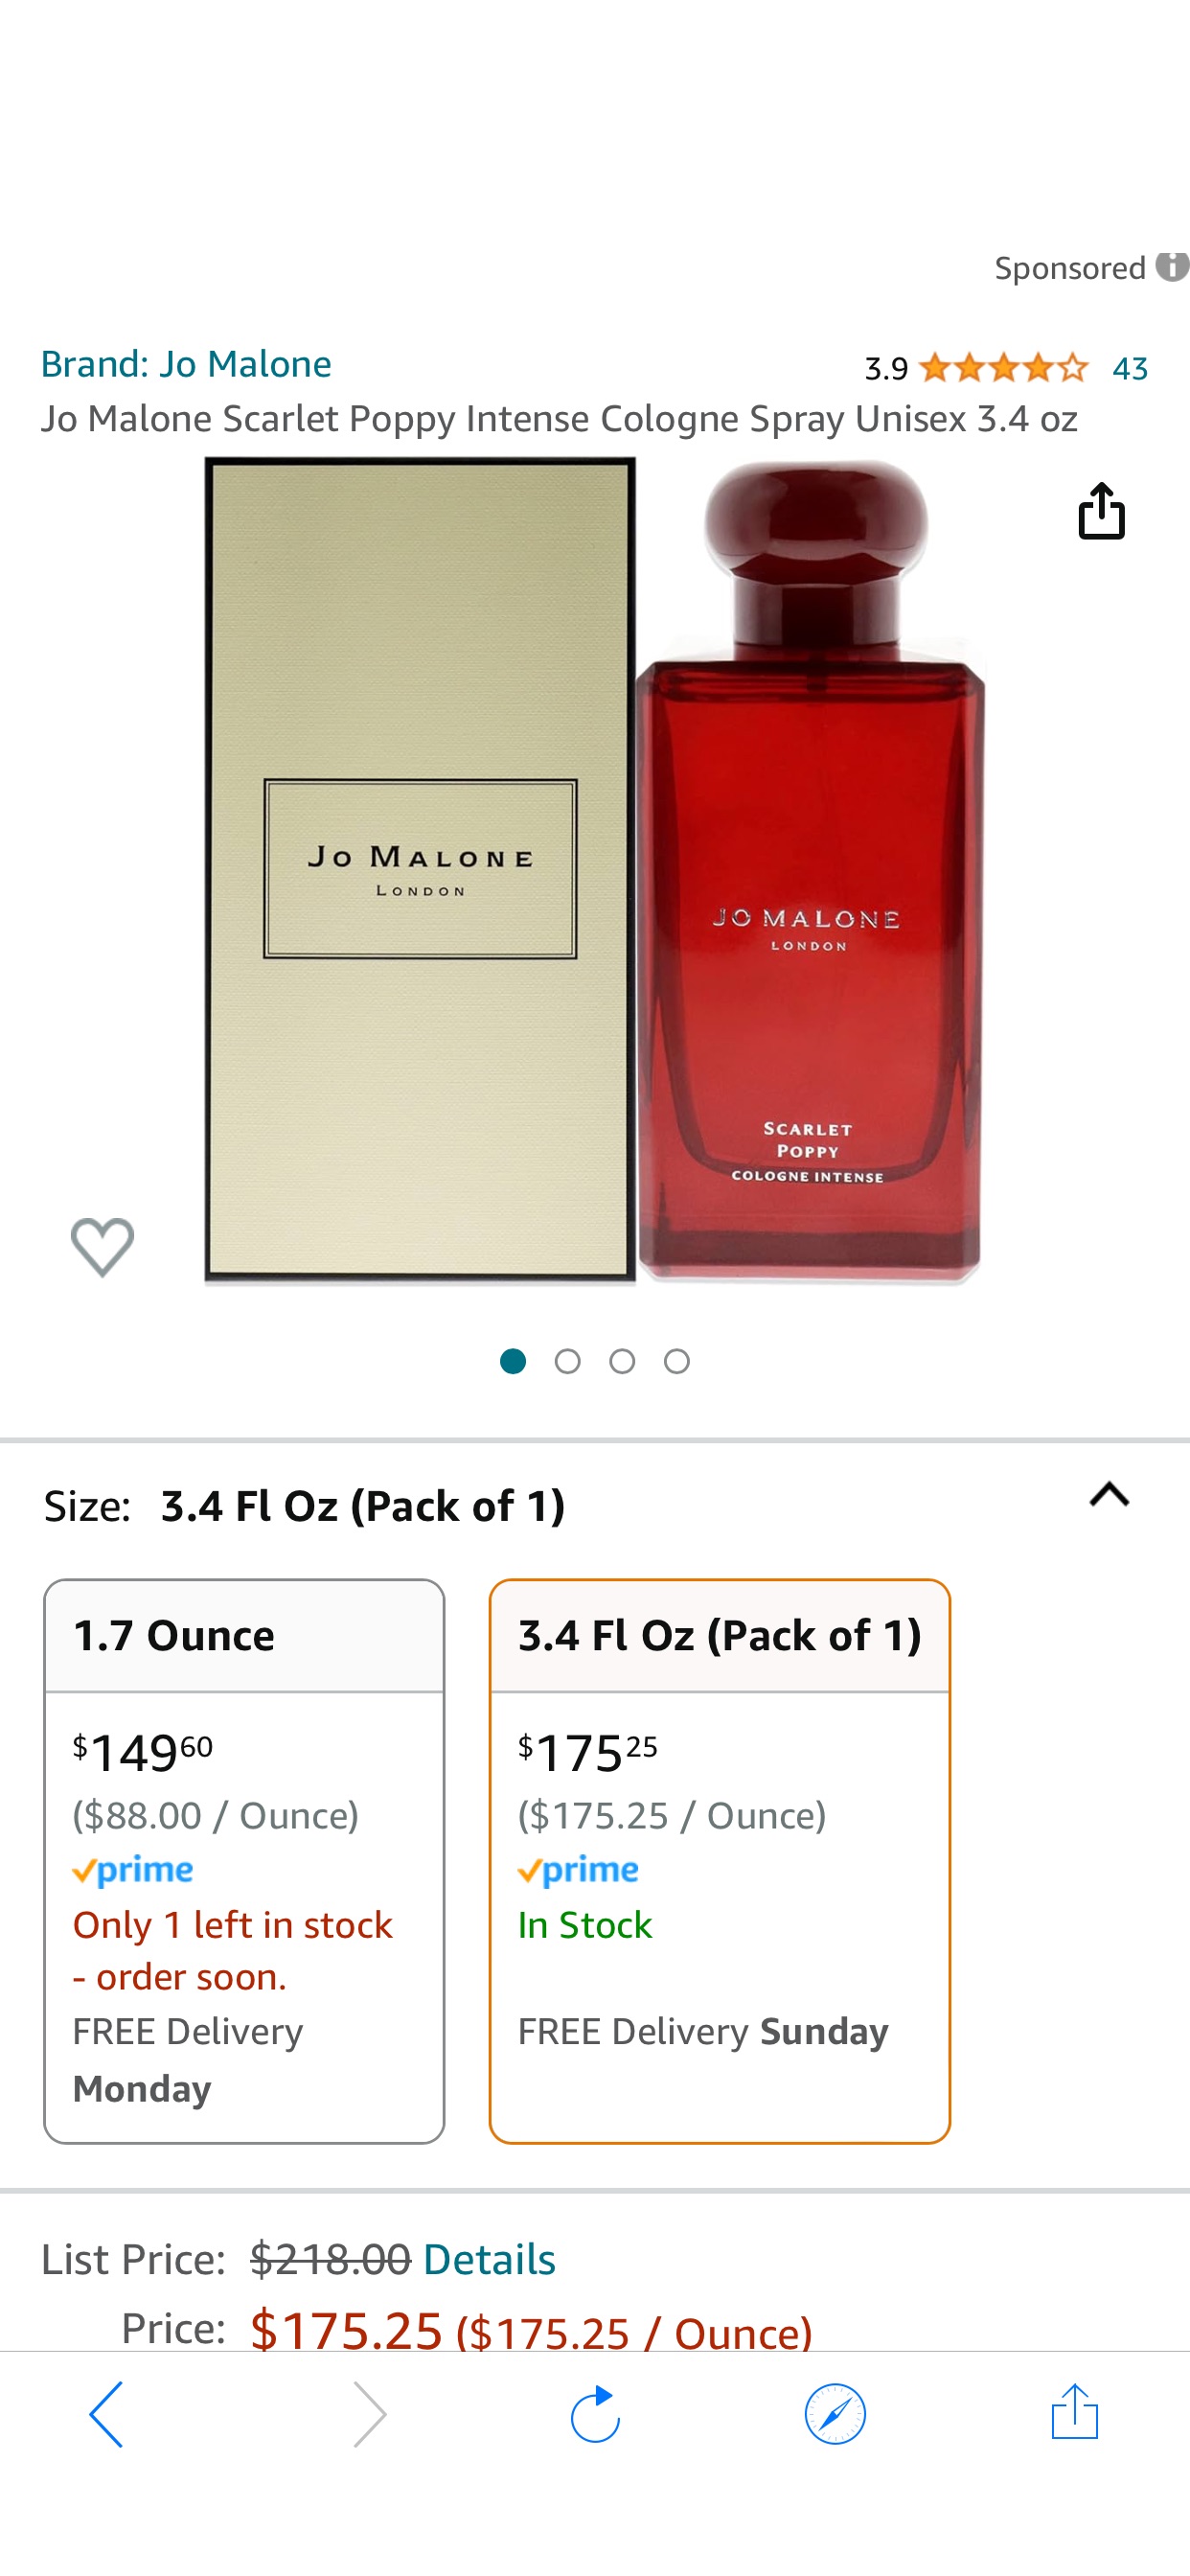 Amazon.com : Jo Malone Scarlet Poppy Intense Cologne Spray Unisex 3.4 oz : Beauty & Personal Care 祖马龙香水